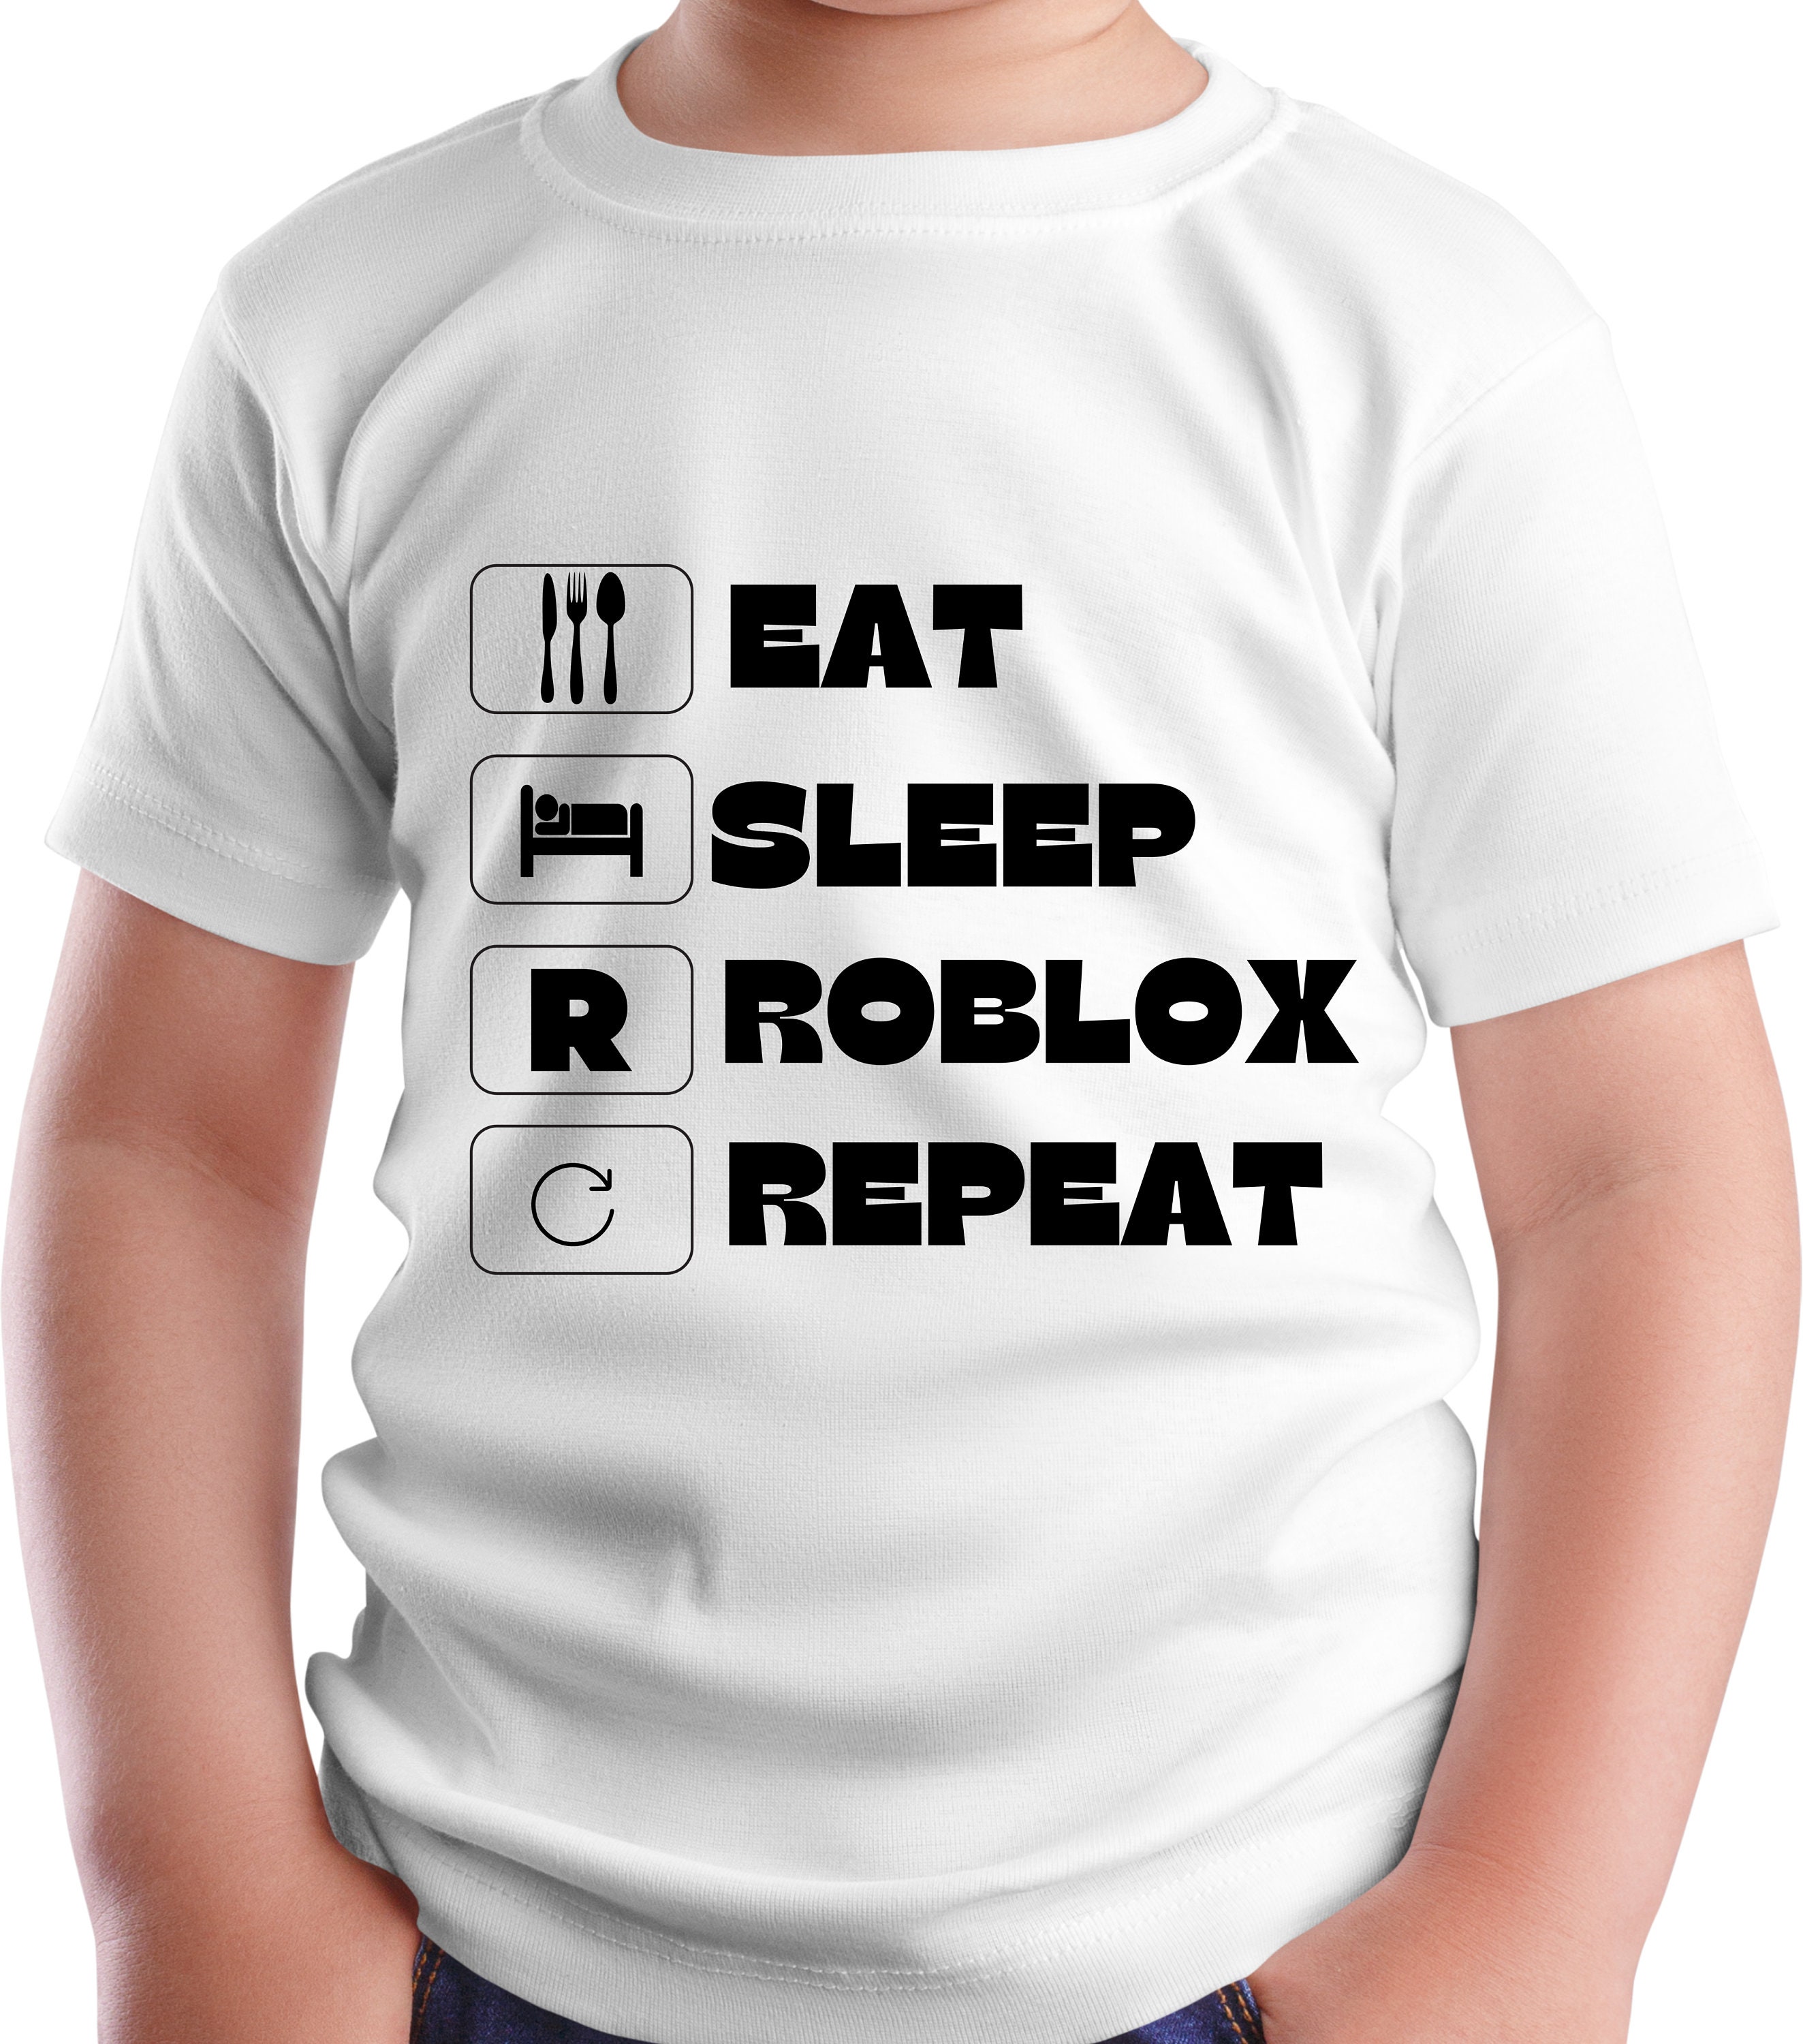 Roblox Noob - Roblox Old T Shirt - Free Transparent PNG Download